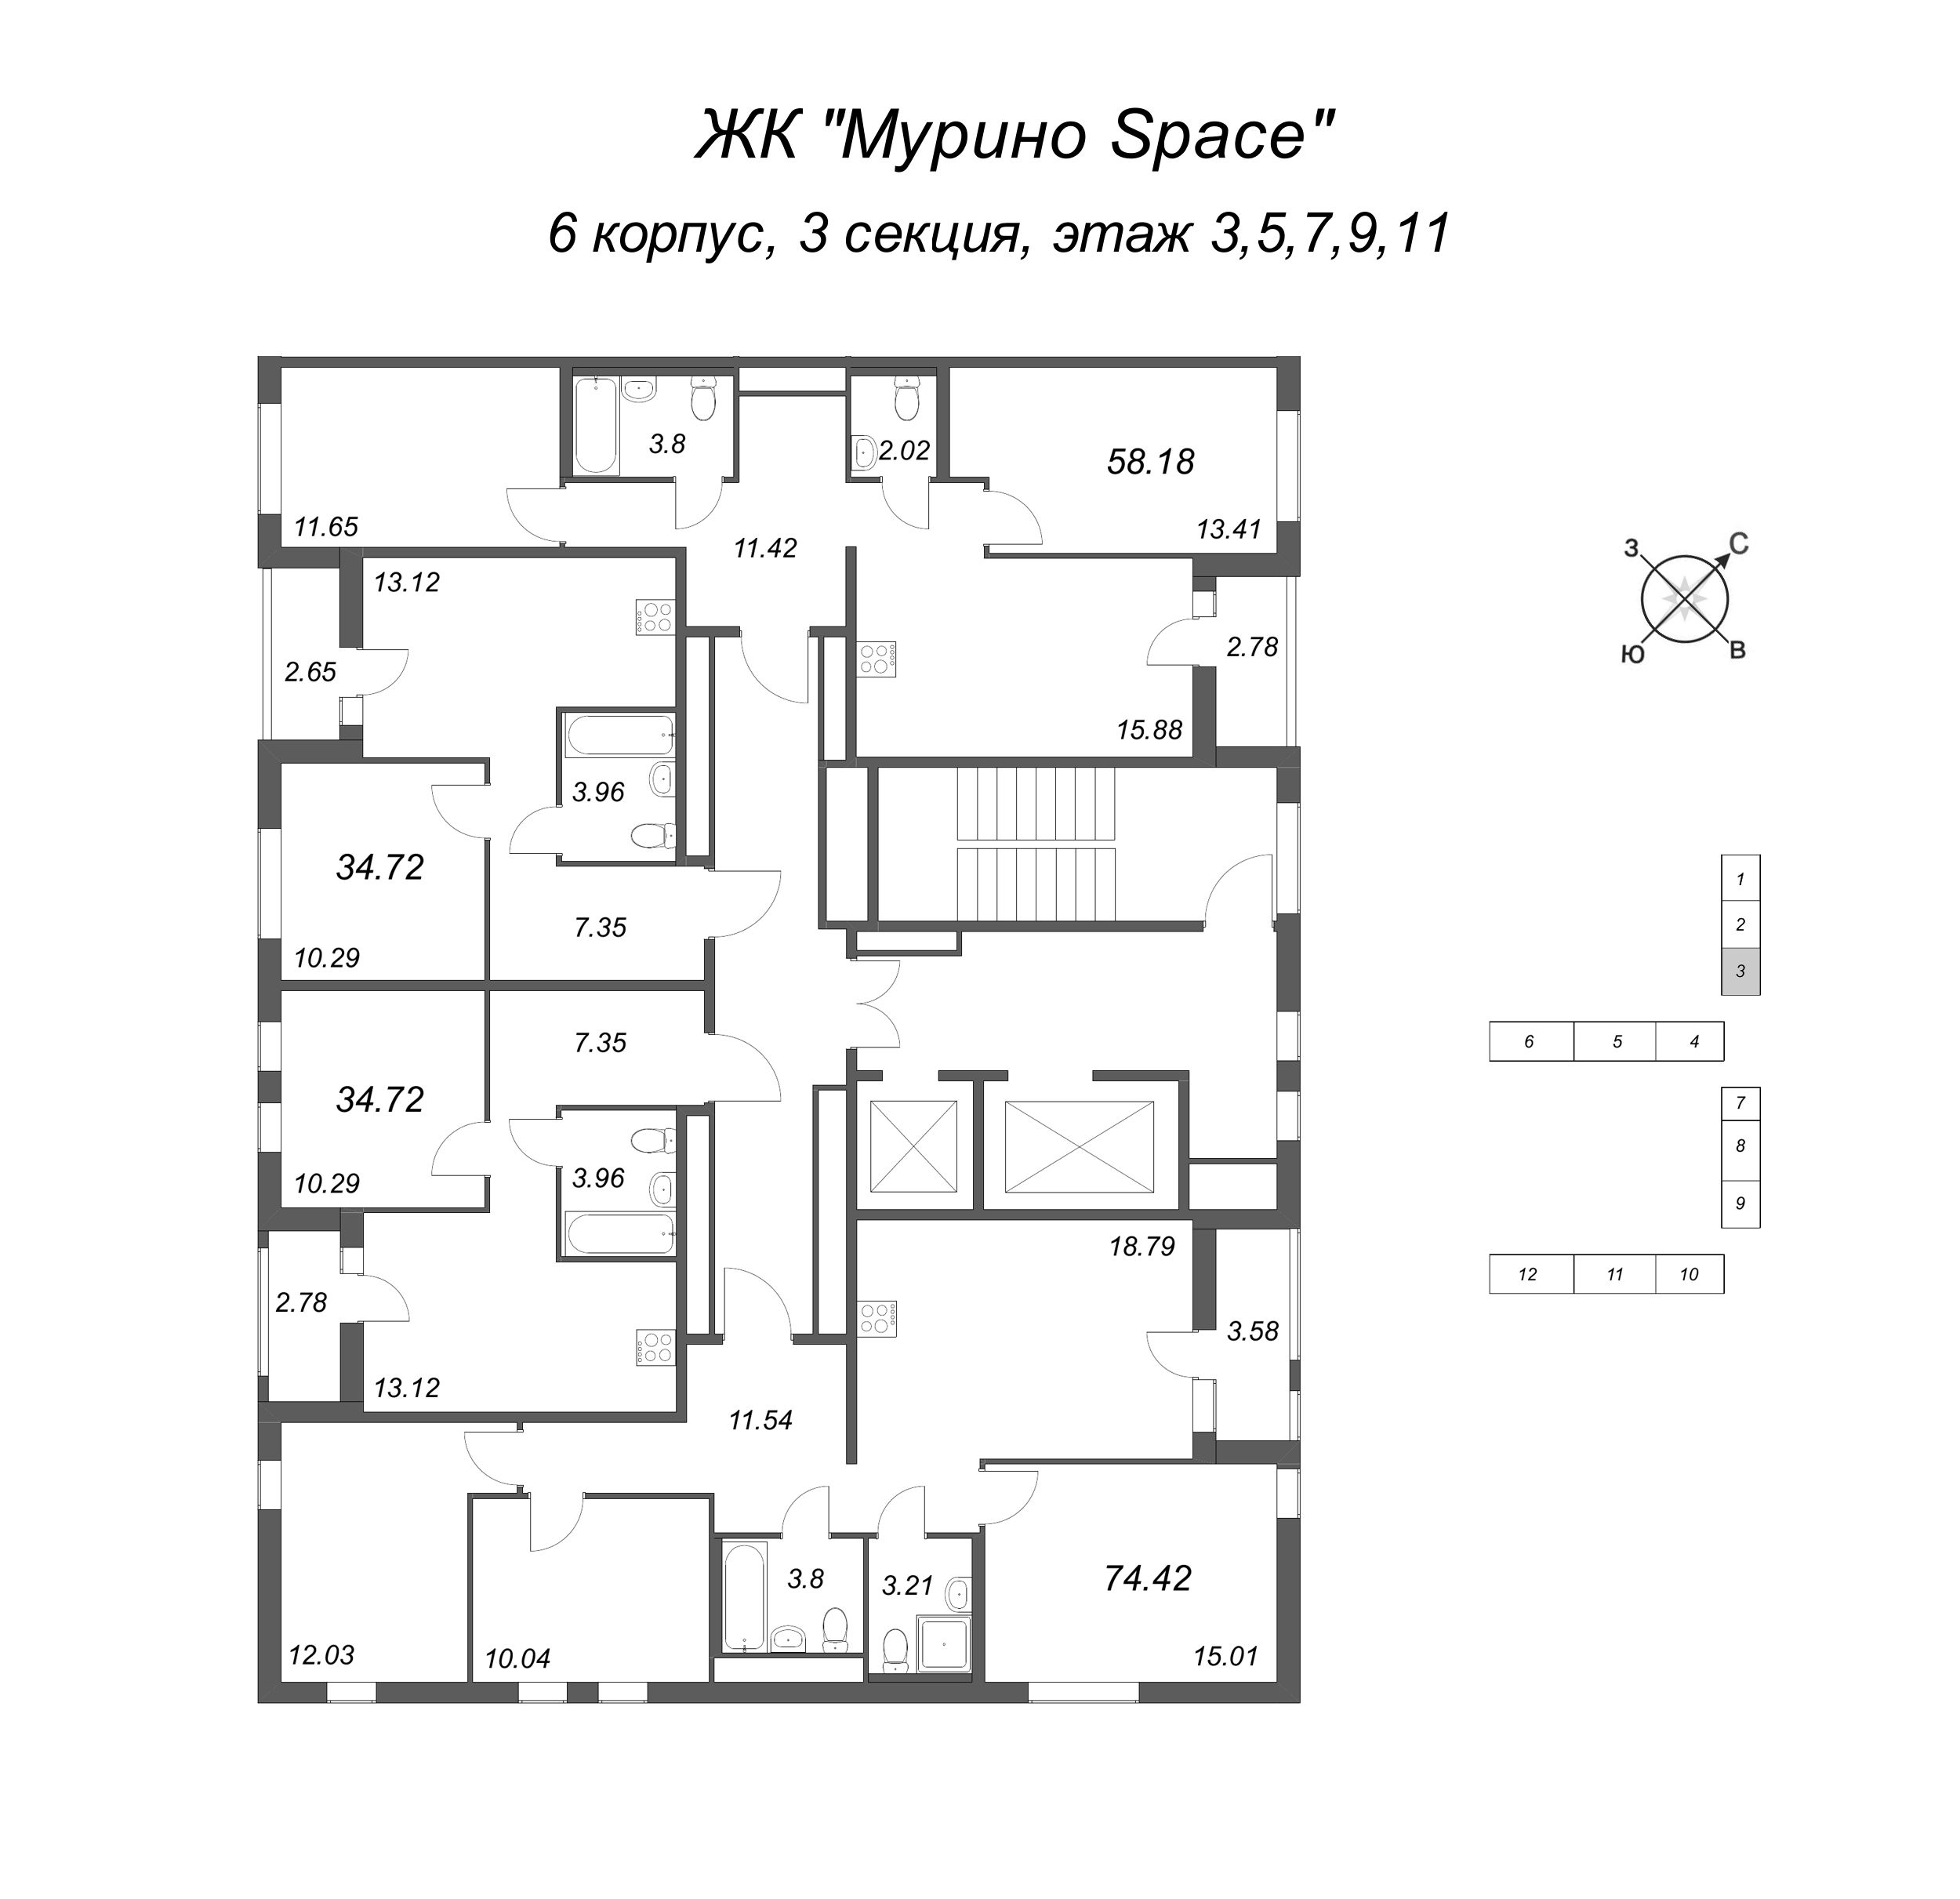 4-комнатная (Евро) квартира, 69.92 м² - планировка этажа